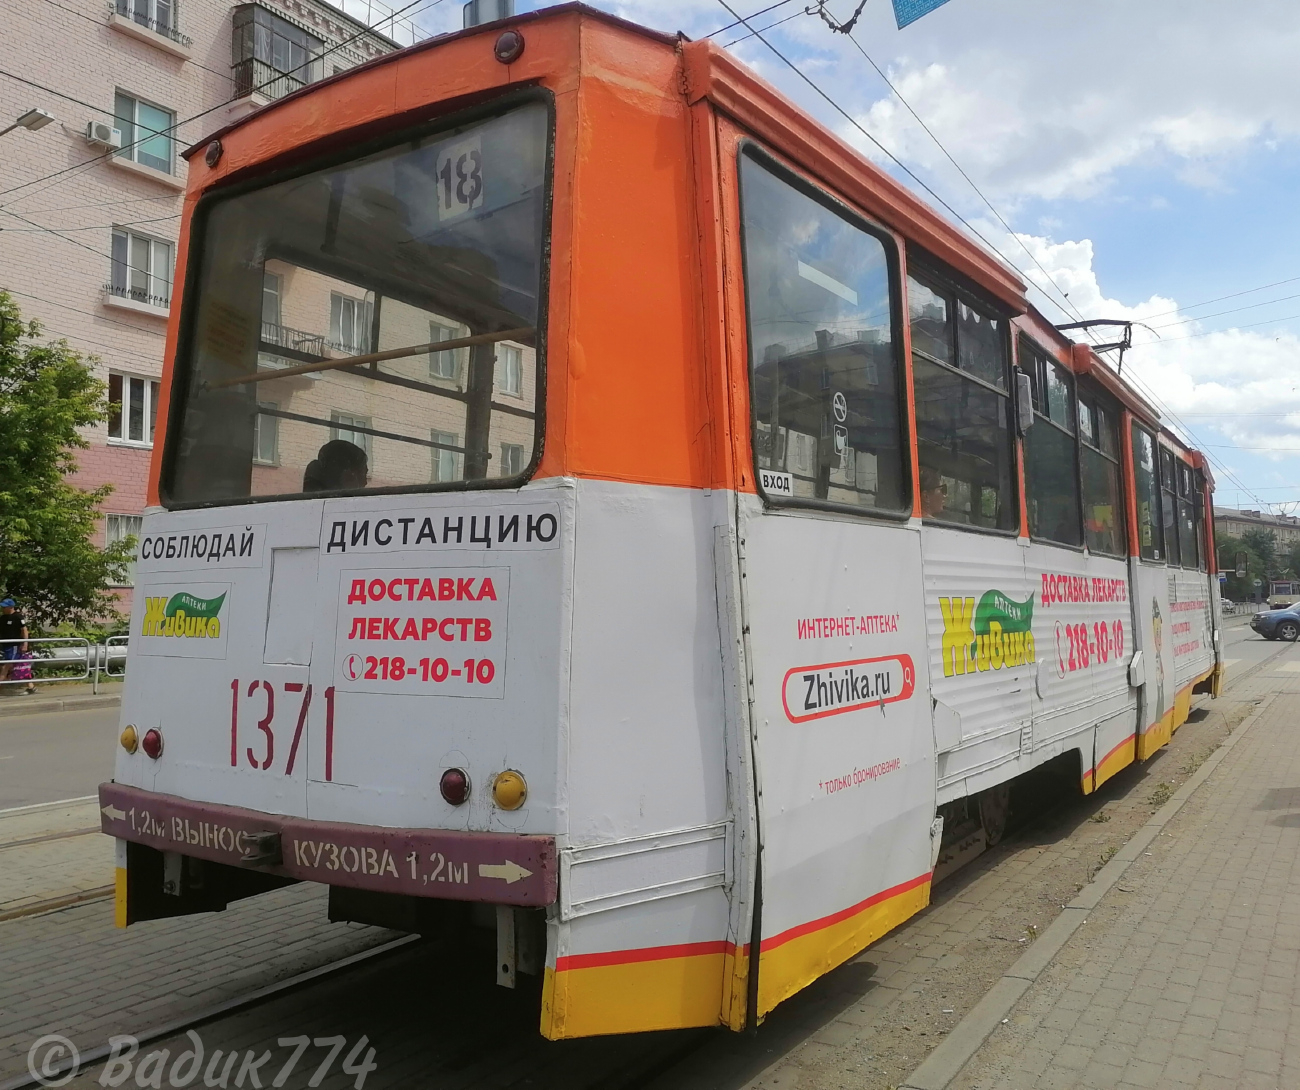 Chelyabinsk, 71-605 (KTM-5M3) Nr 1371